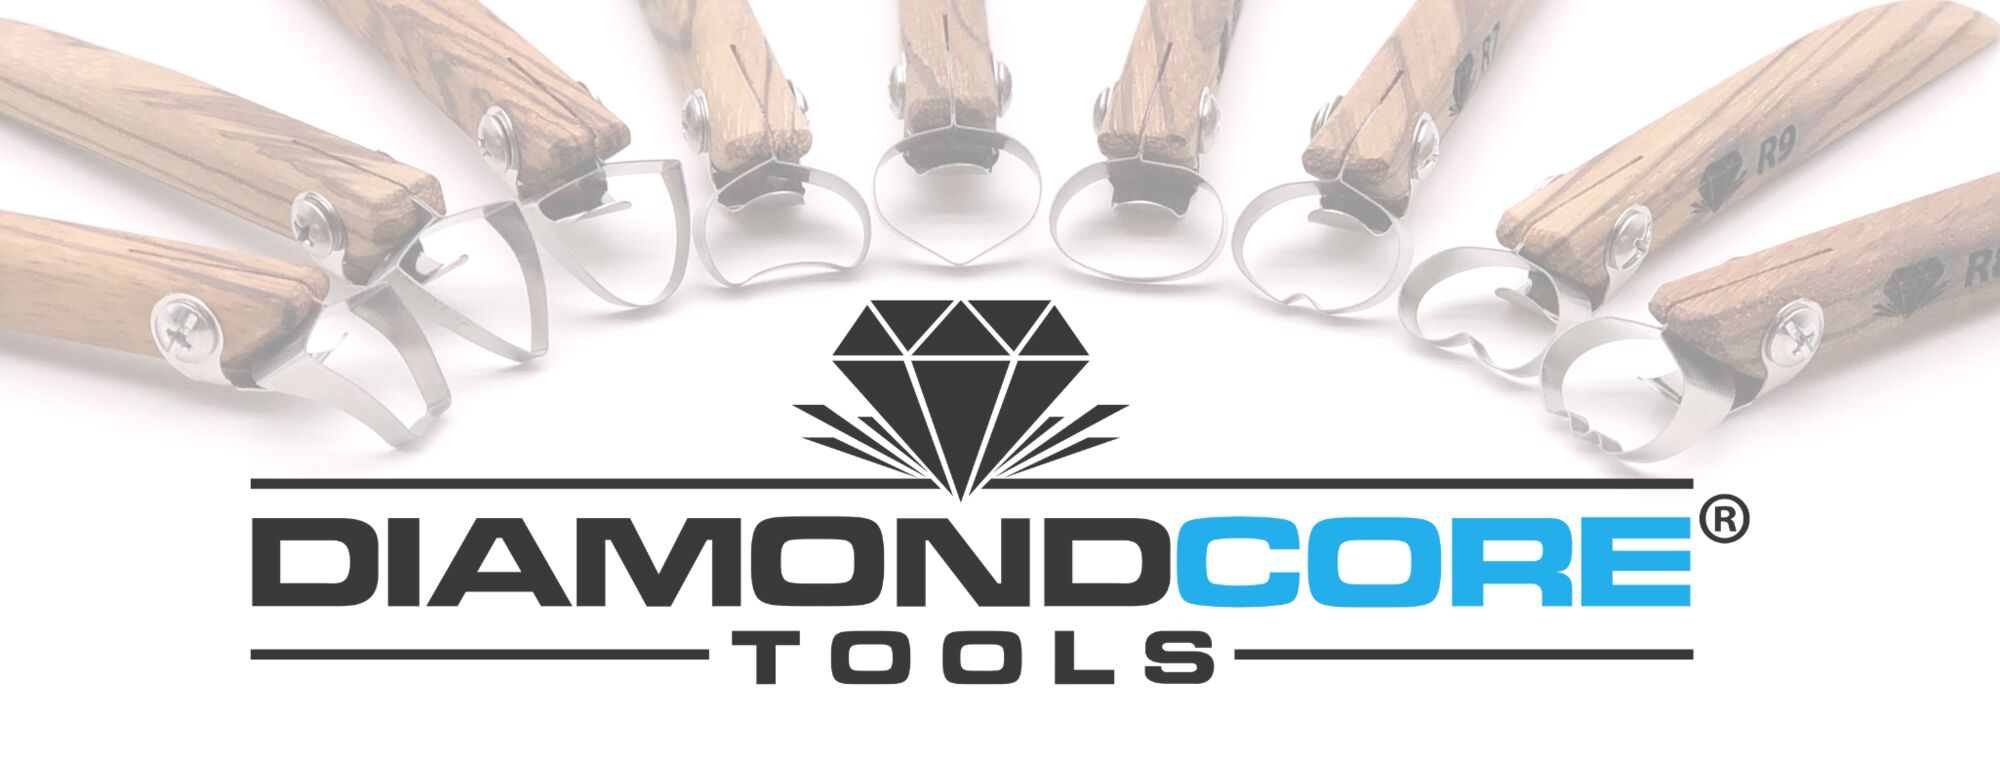 A Sneak Peek at 2023 with DiamondCore® Tools - Diamond Core Tools